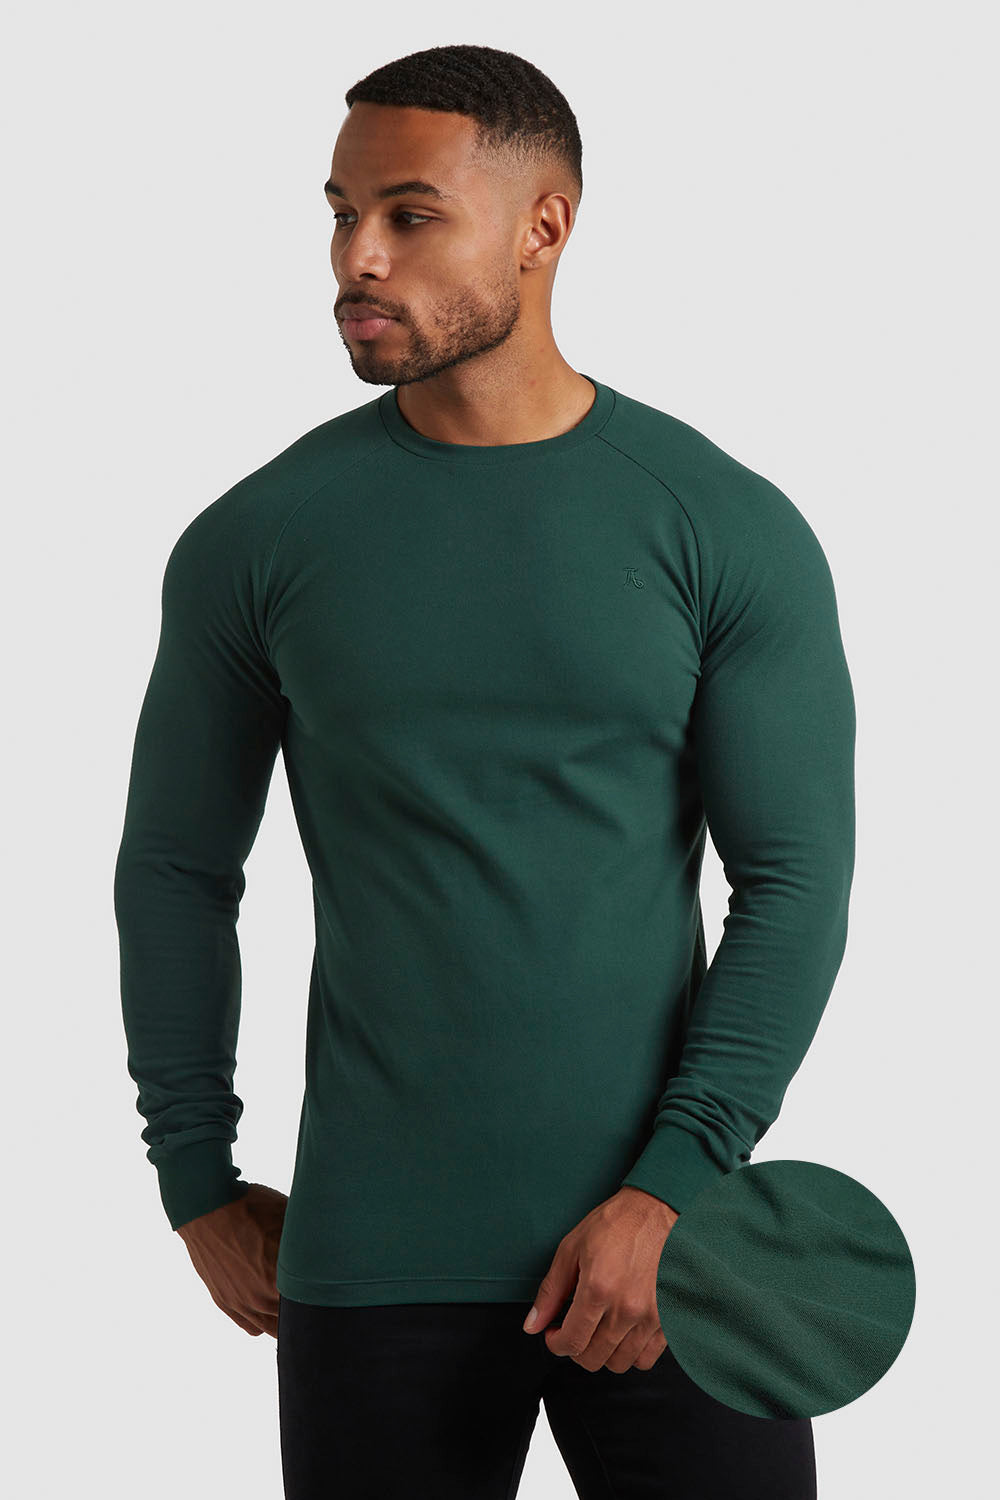 Pique Long Sleeve T-Shirt in Racing Green